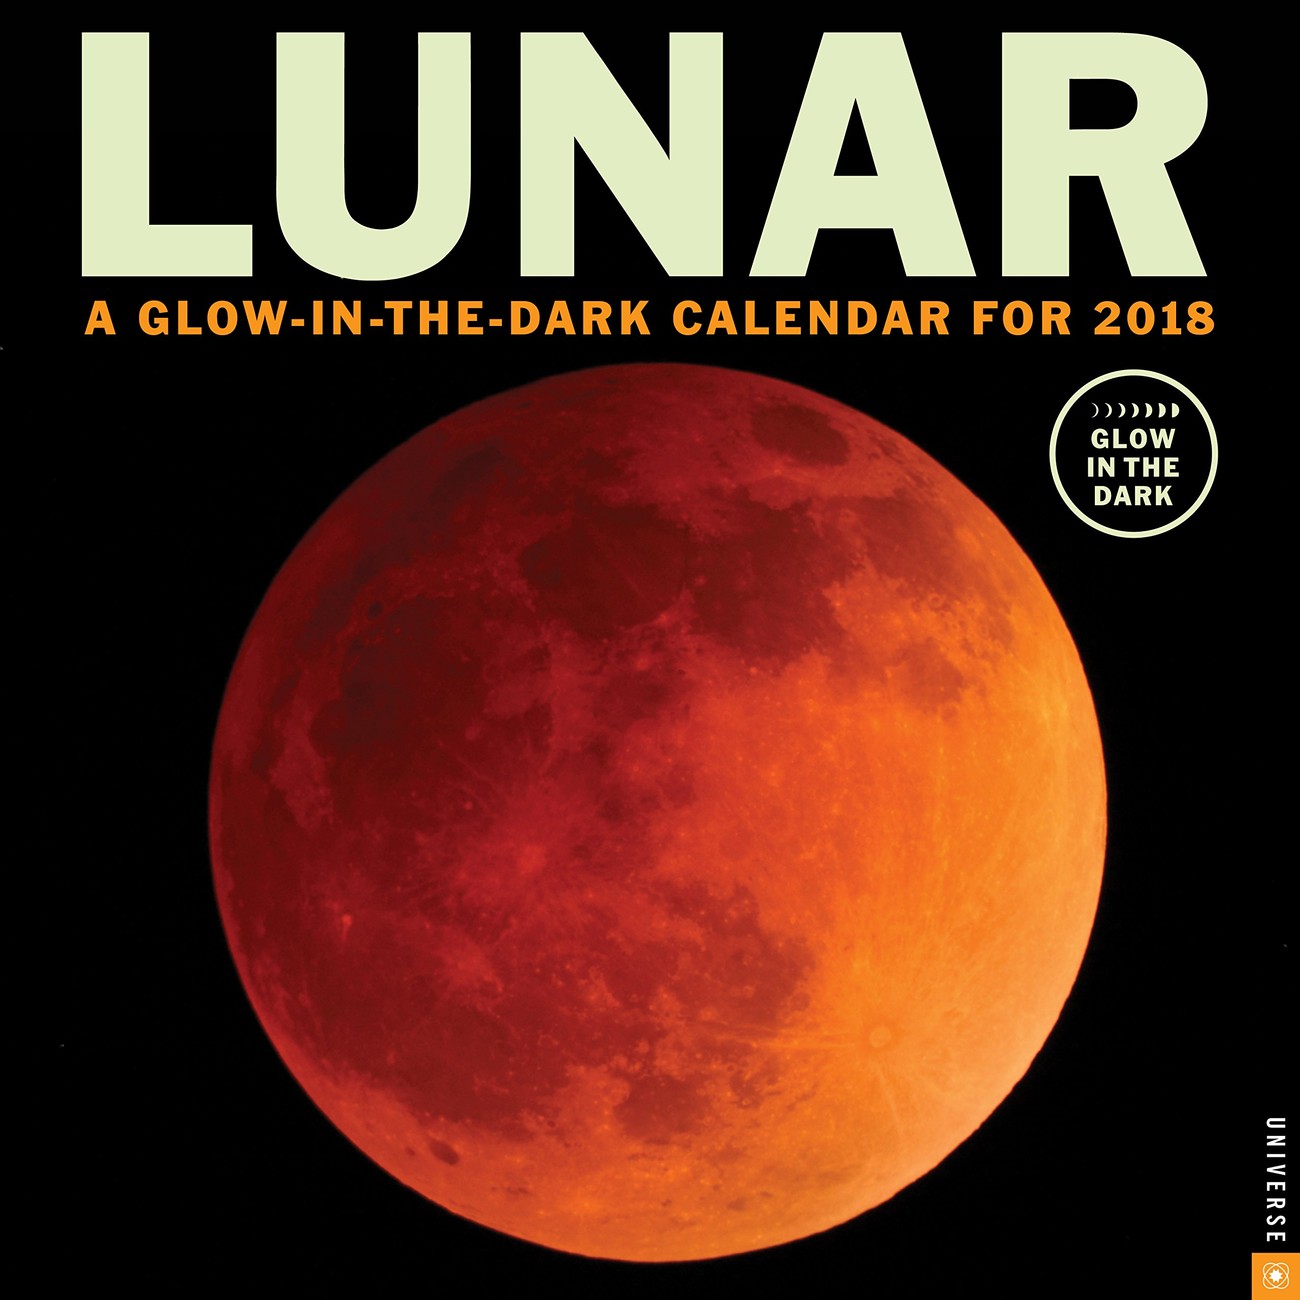 Lunar Wall Calendars 2018 Large selection